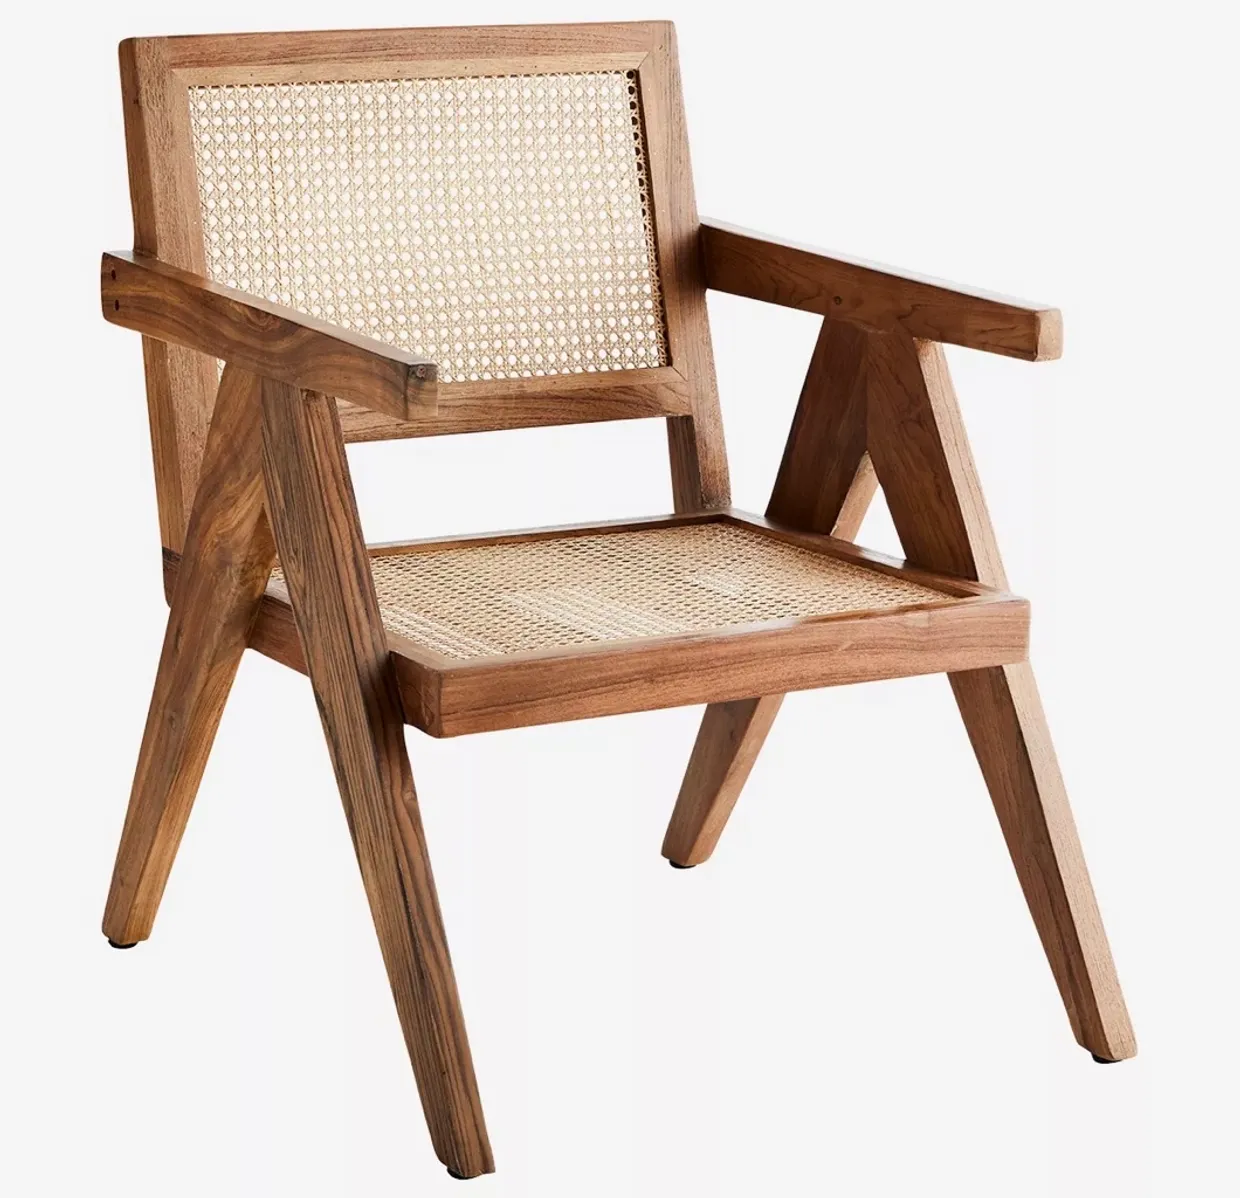 Teak wood Rattan/Wicker Chair 52x46x79cm